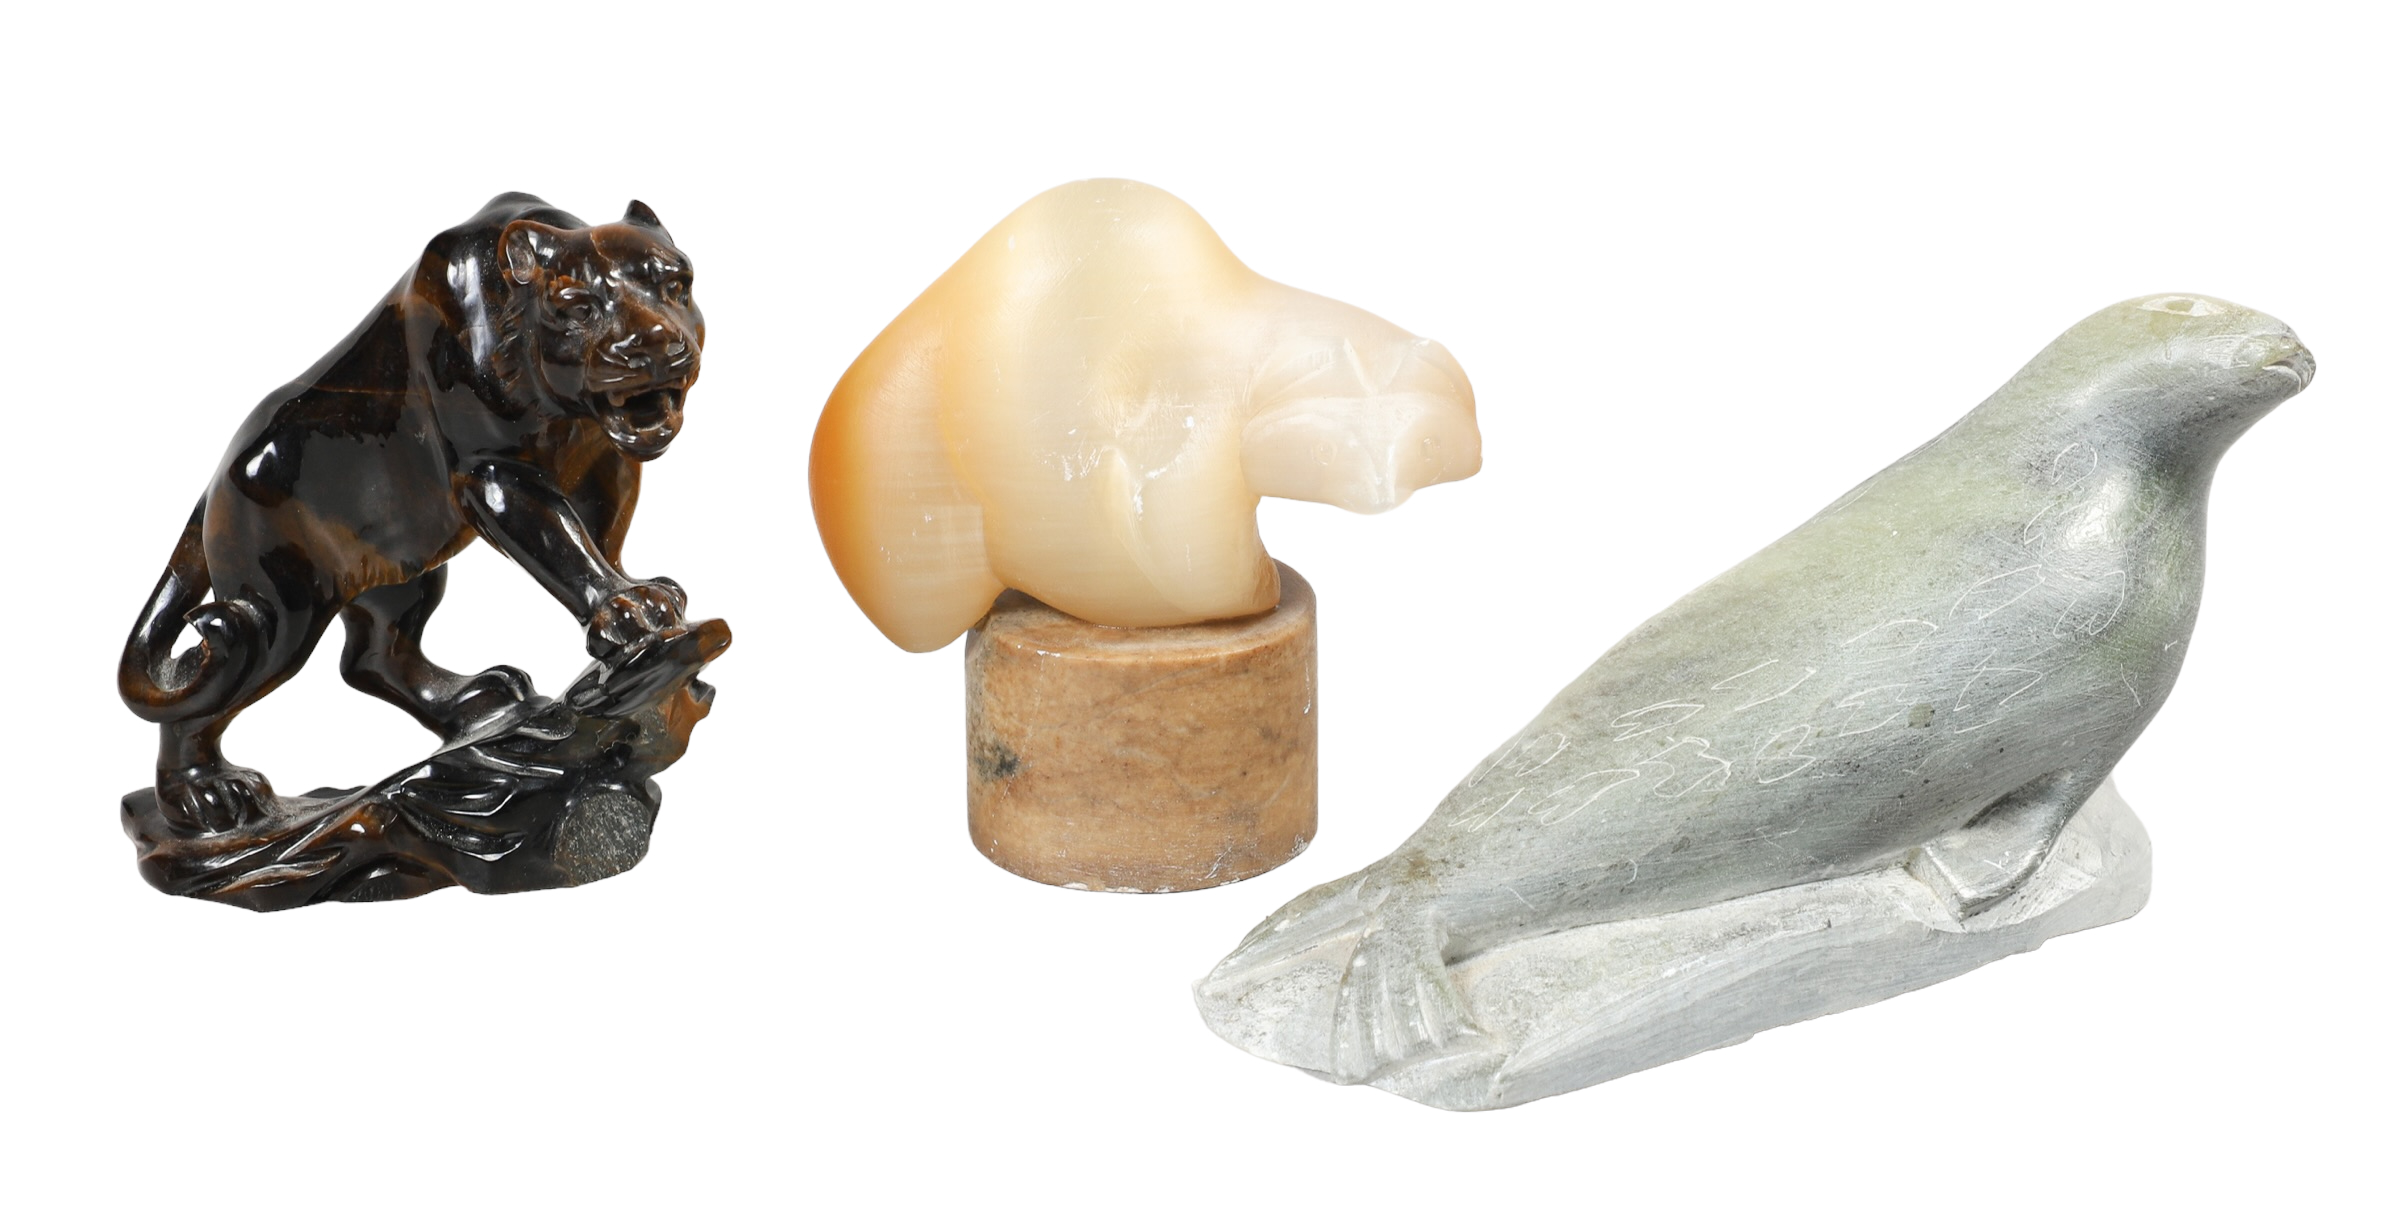  3 Carved stone animal figurines  317f2c